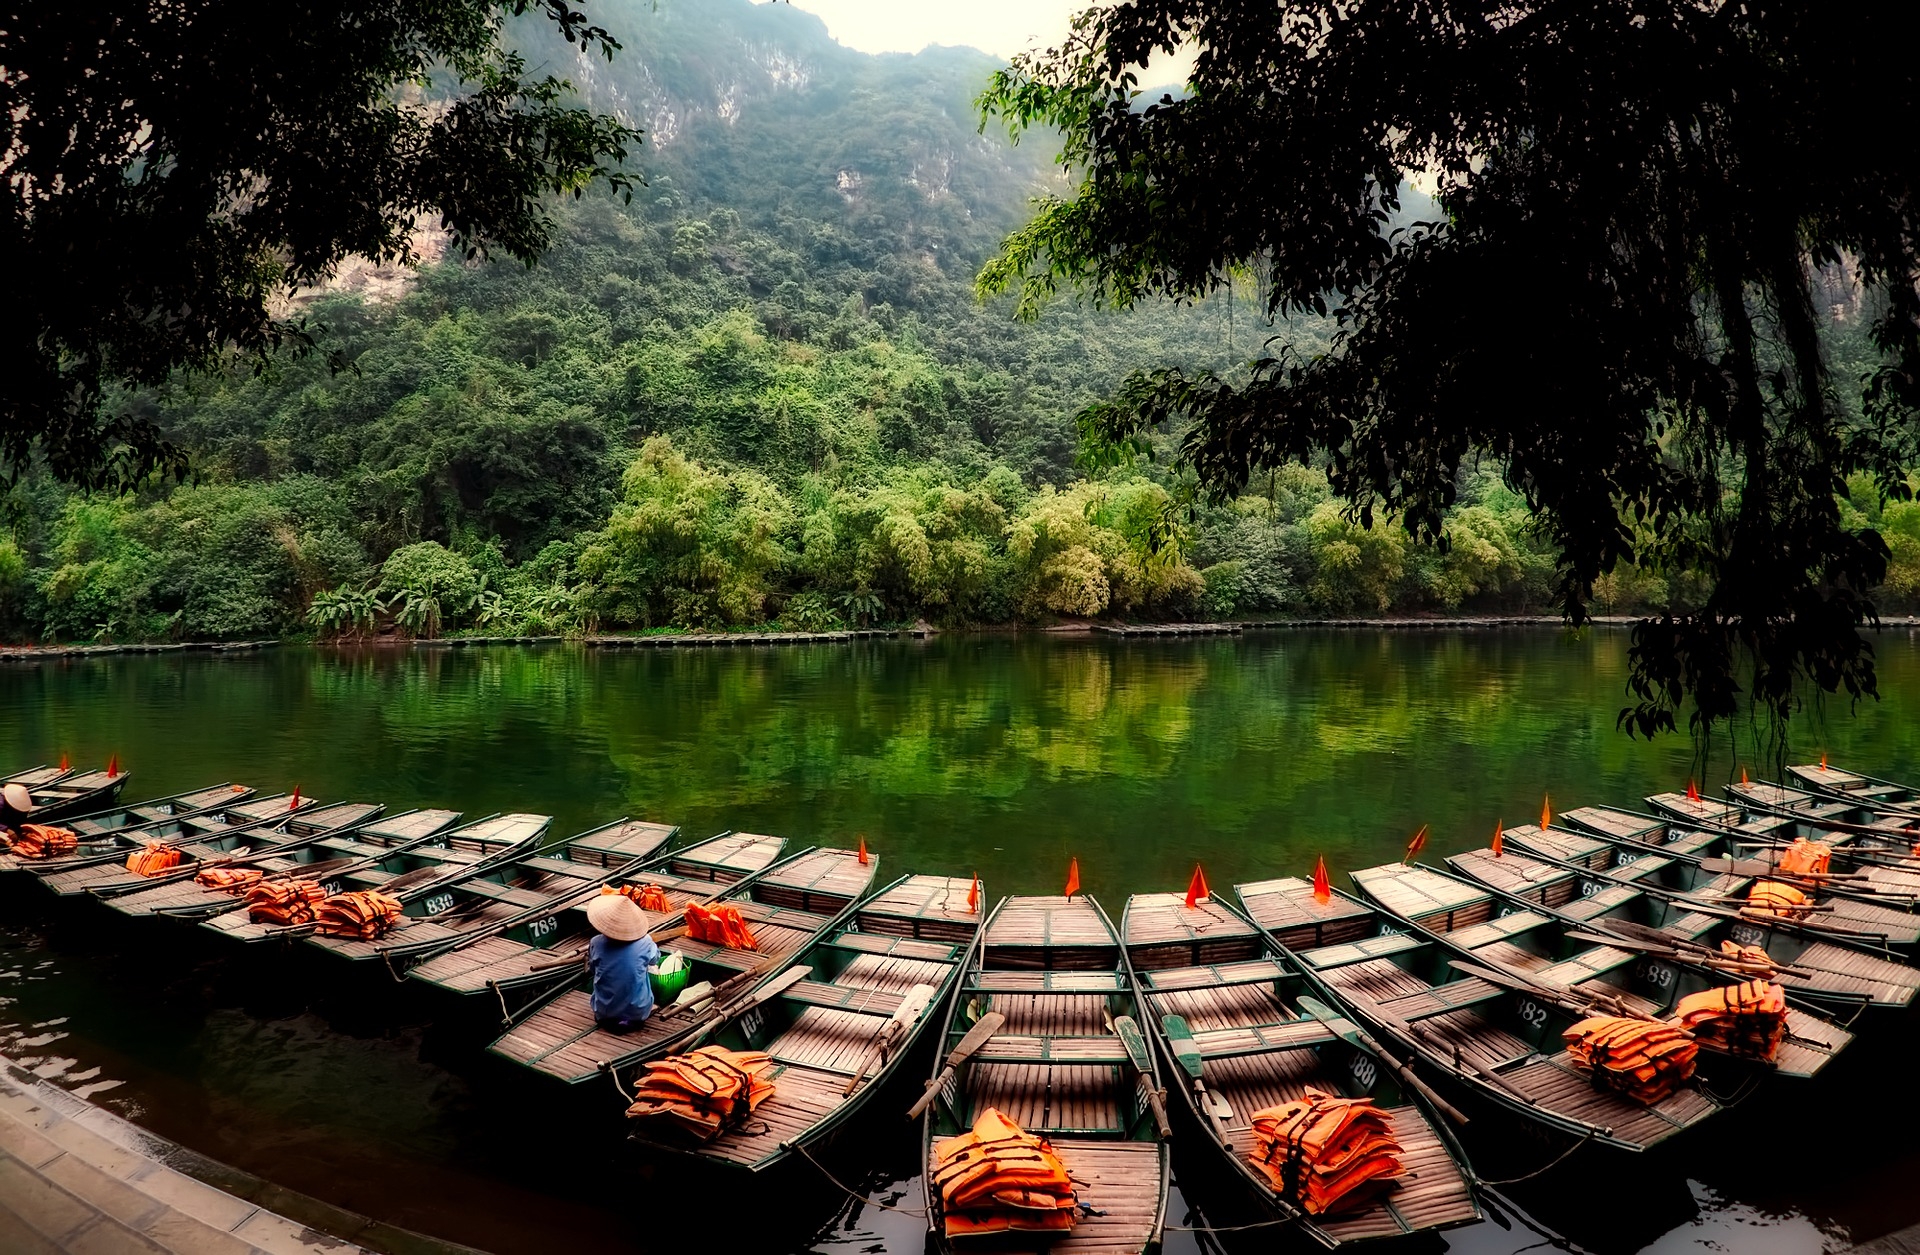 https://pixabay.com/en/vietnam-boats-life-jackets-forest-2681566/